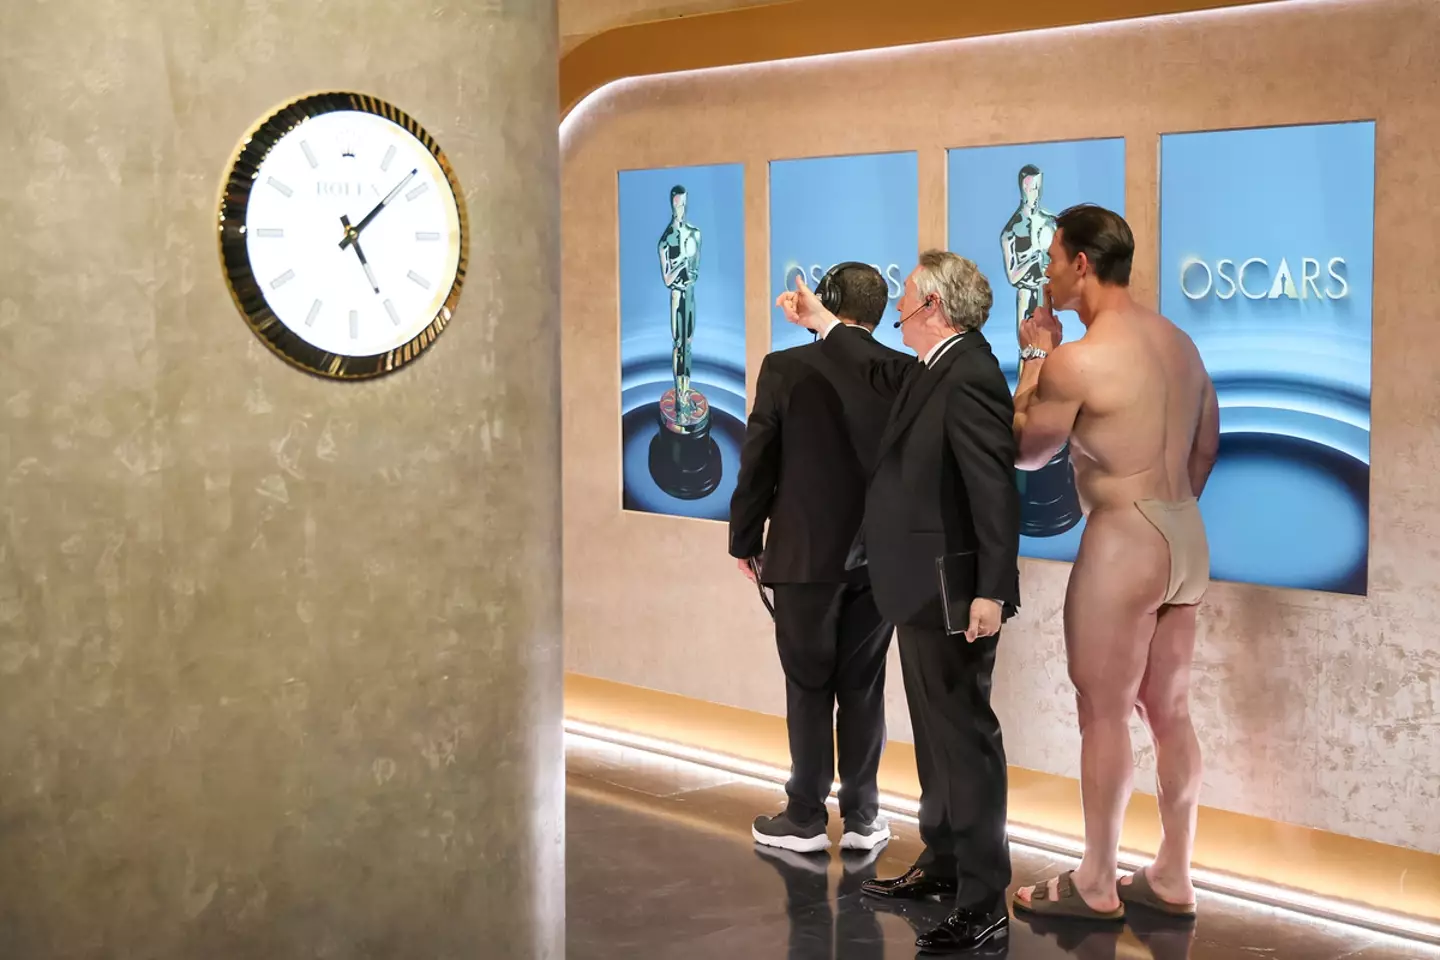 Backstage images showed that John Cena wasn't nude after all.